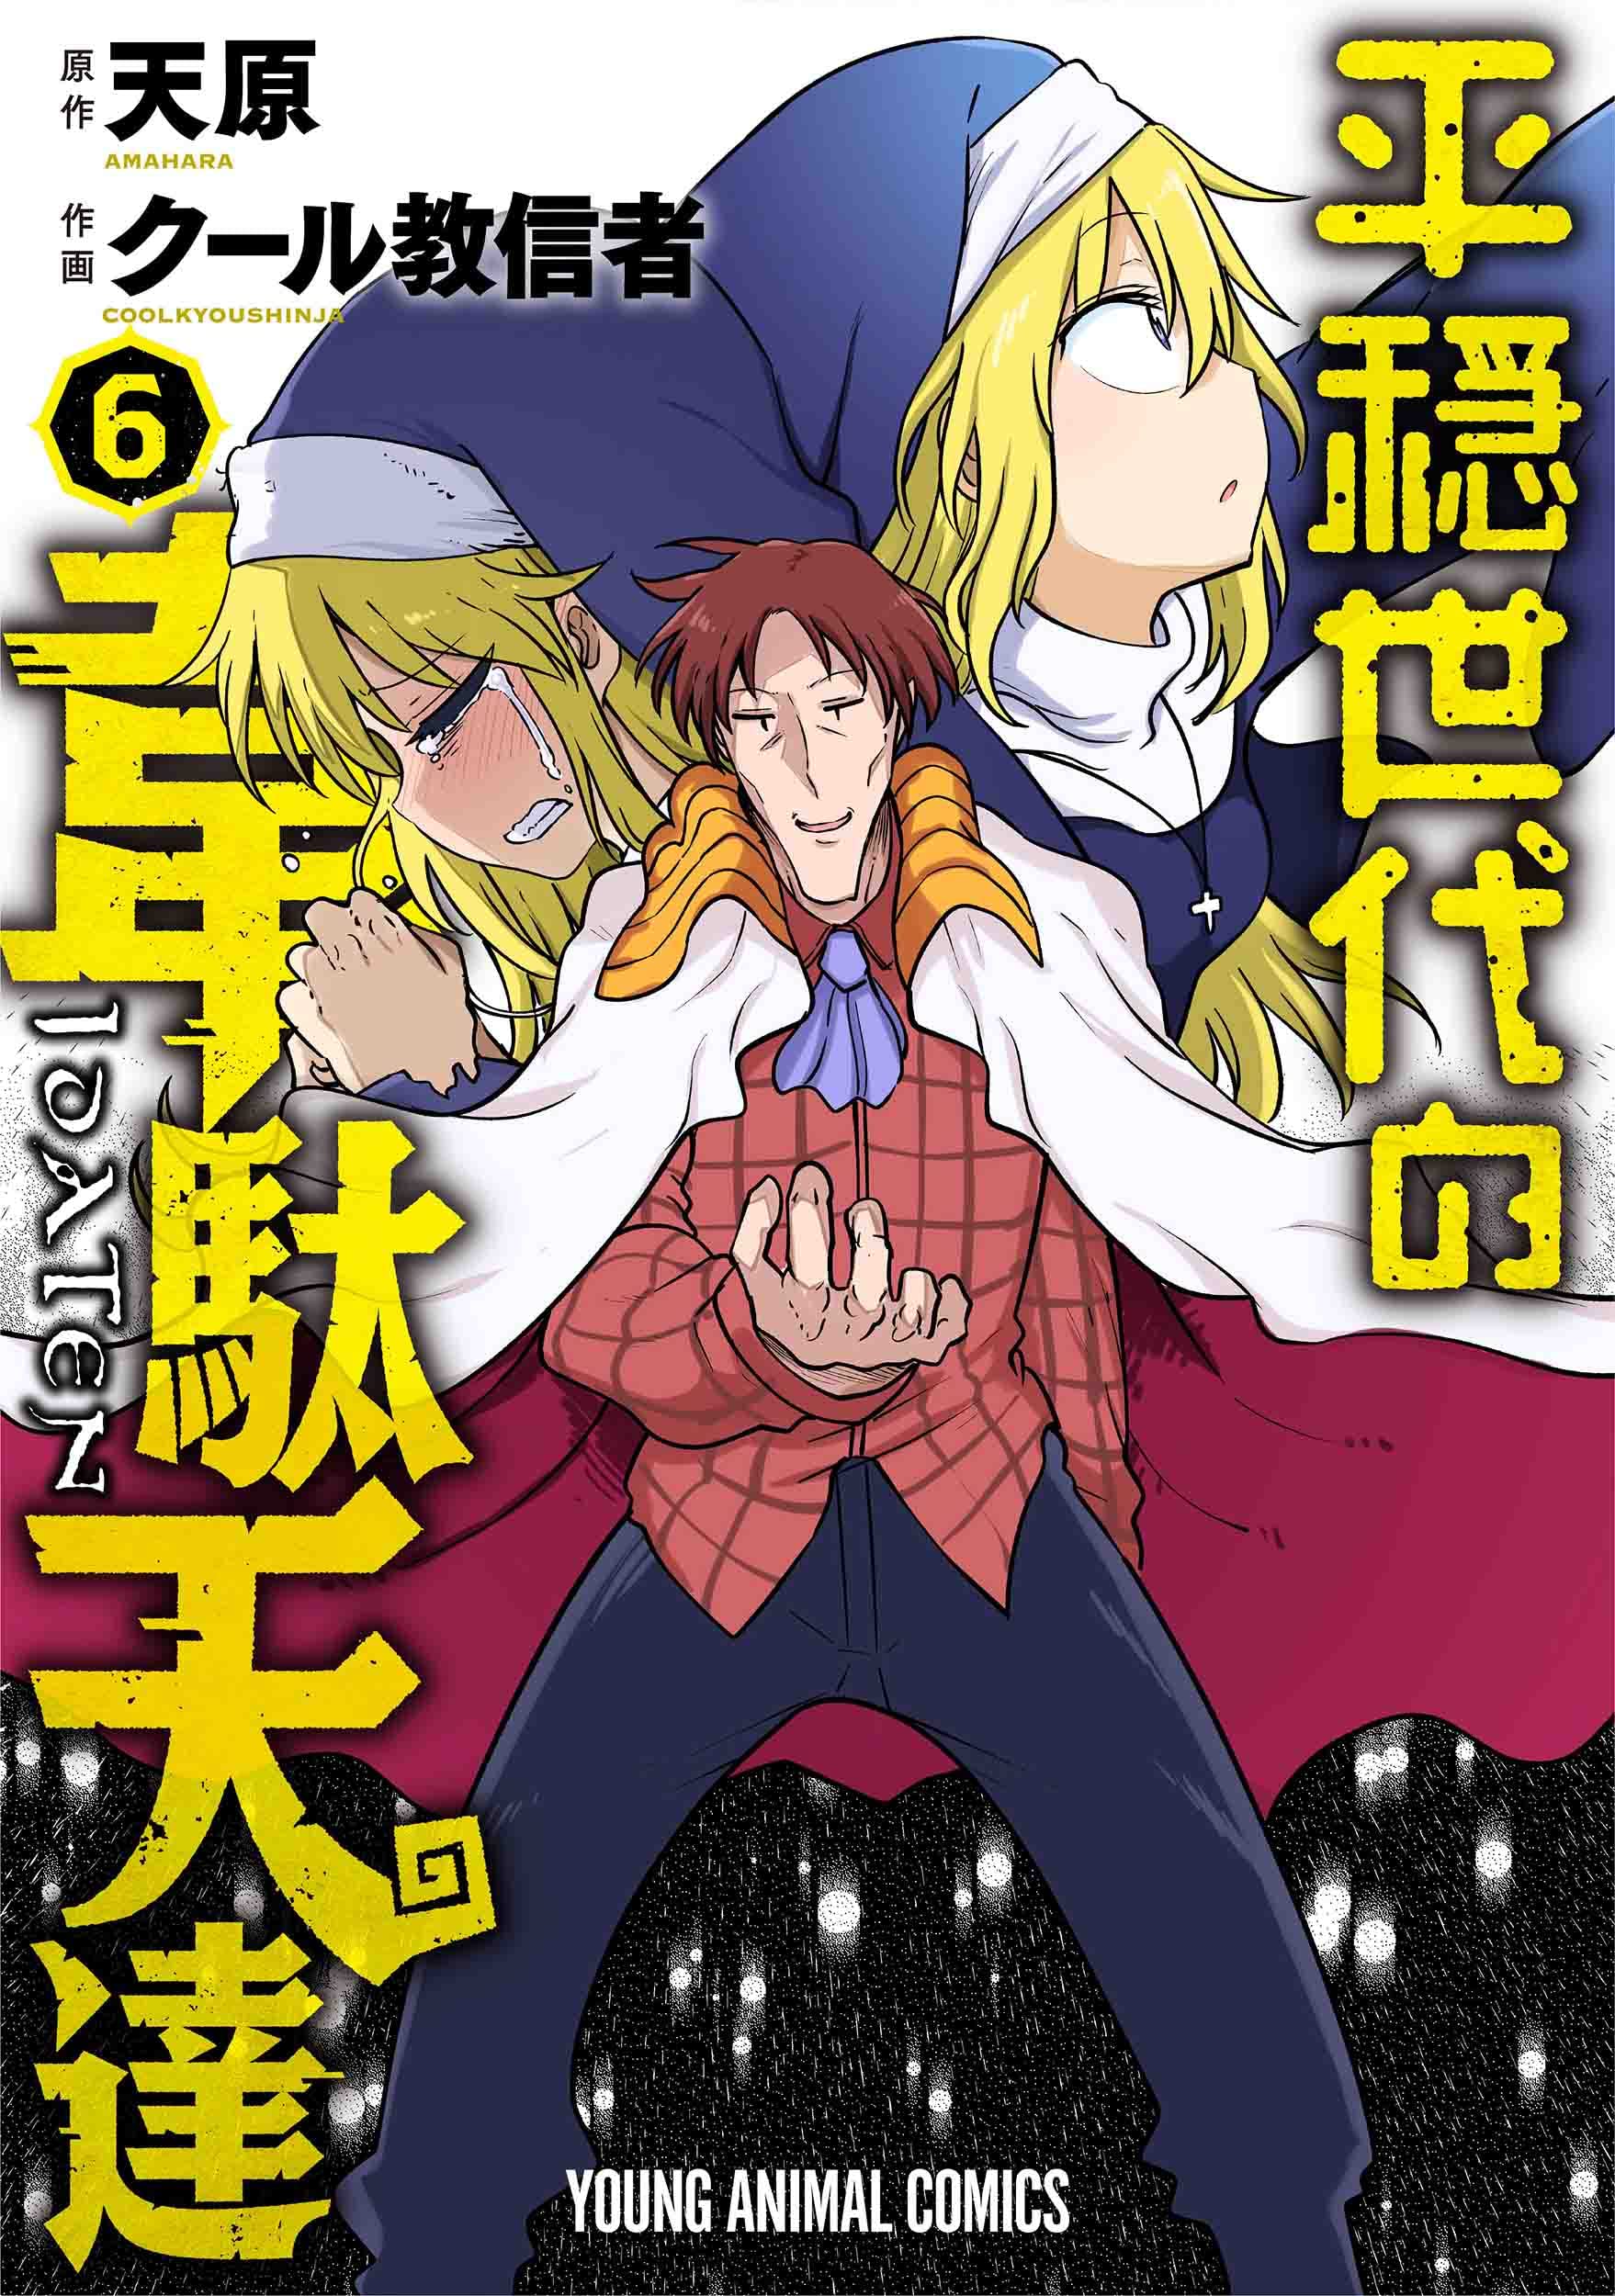 Coolkyoushinja, Amahara's Heion Sedai no idaten-tachi Manga Listed with TV  Anime - News - Anime News Network